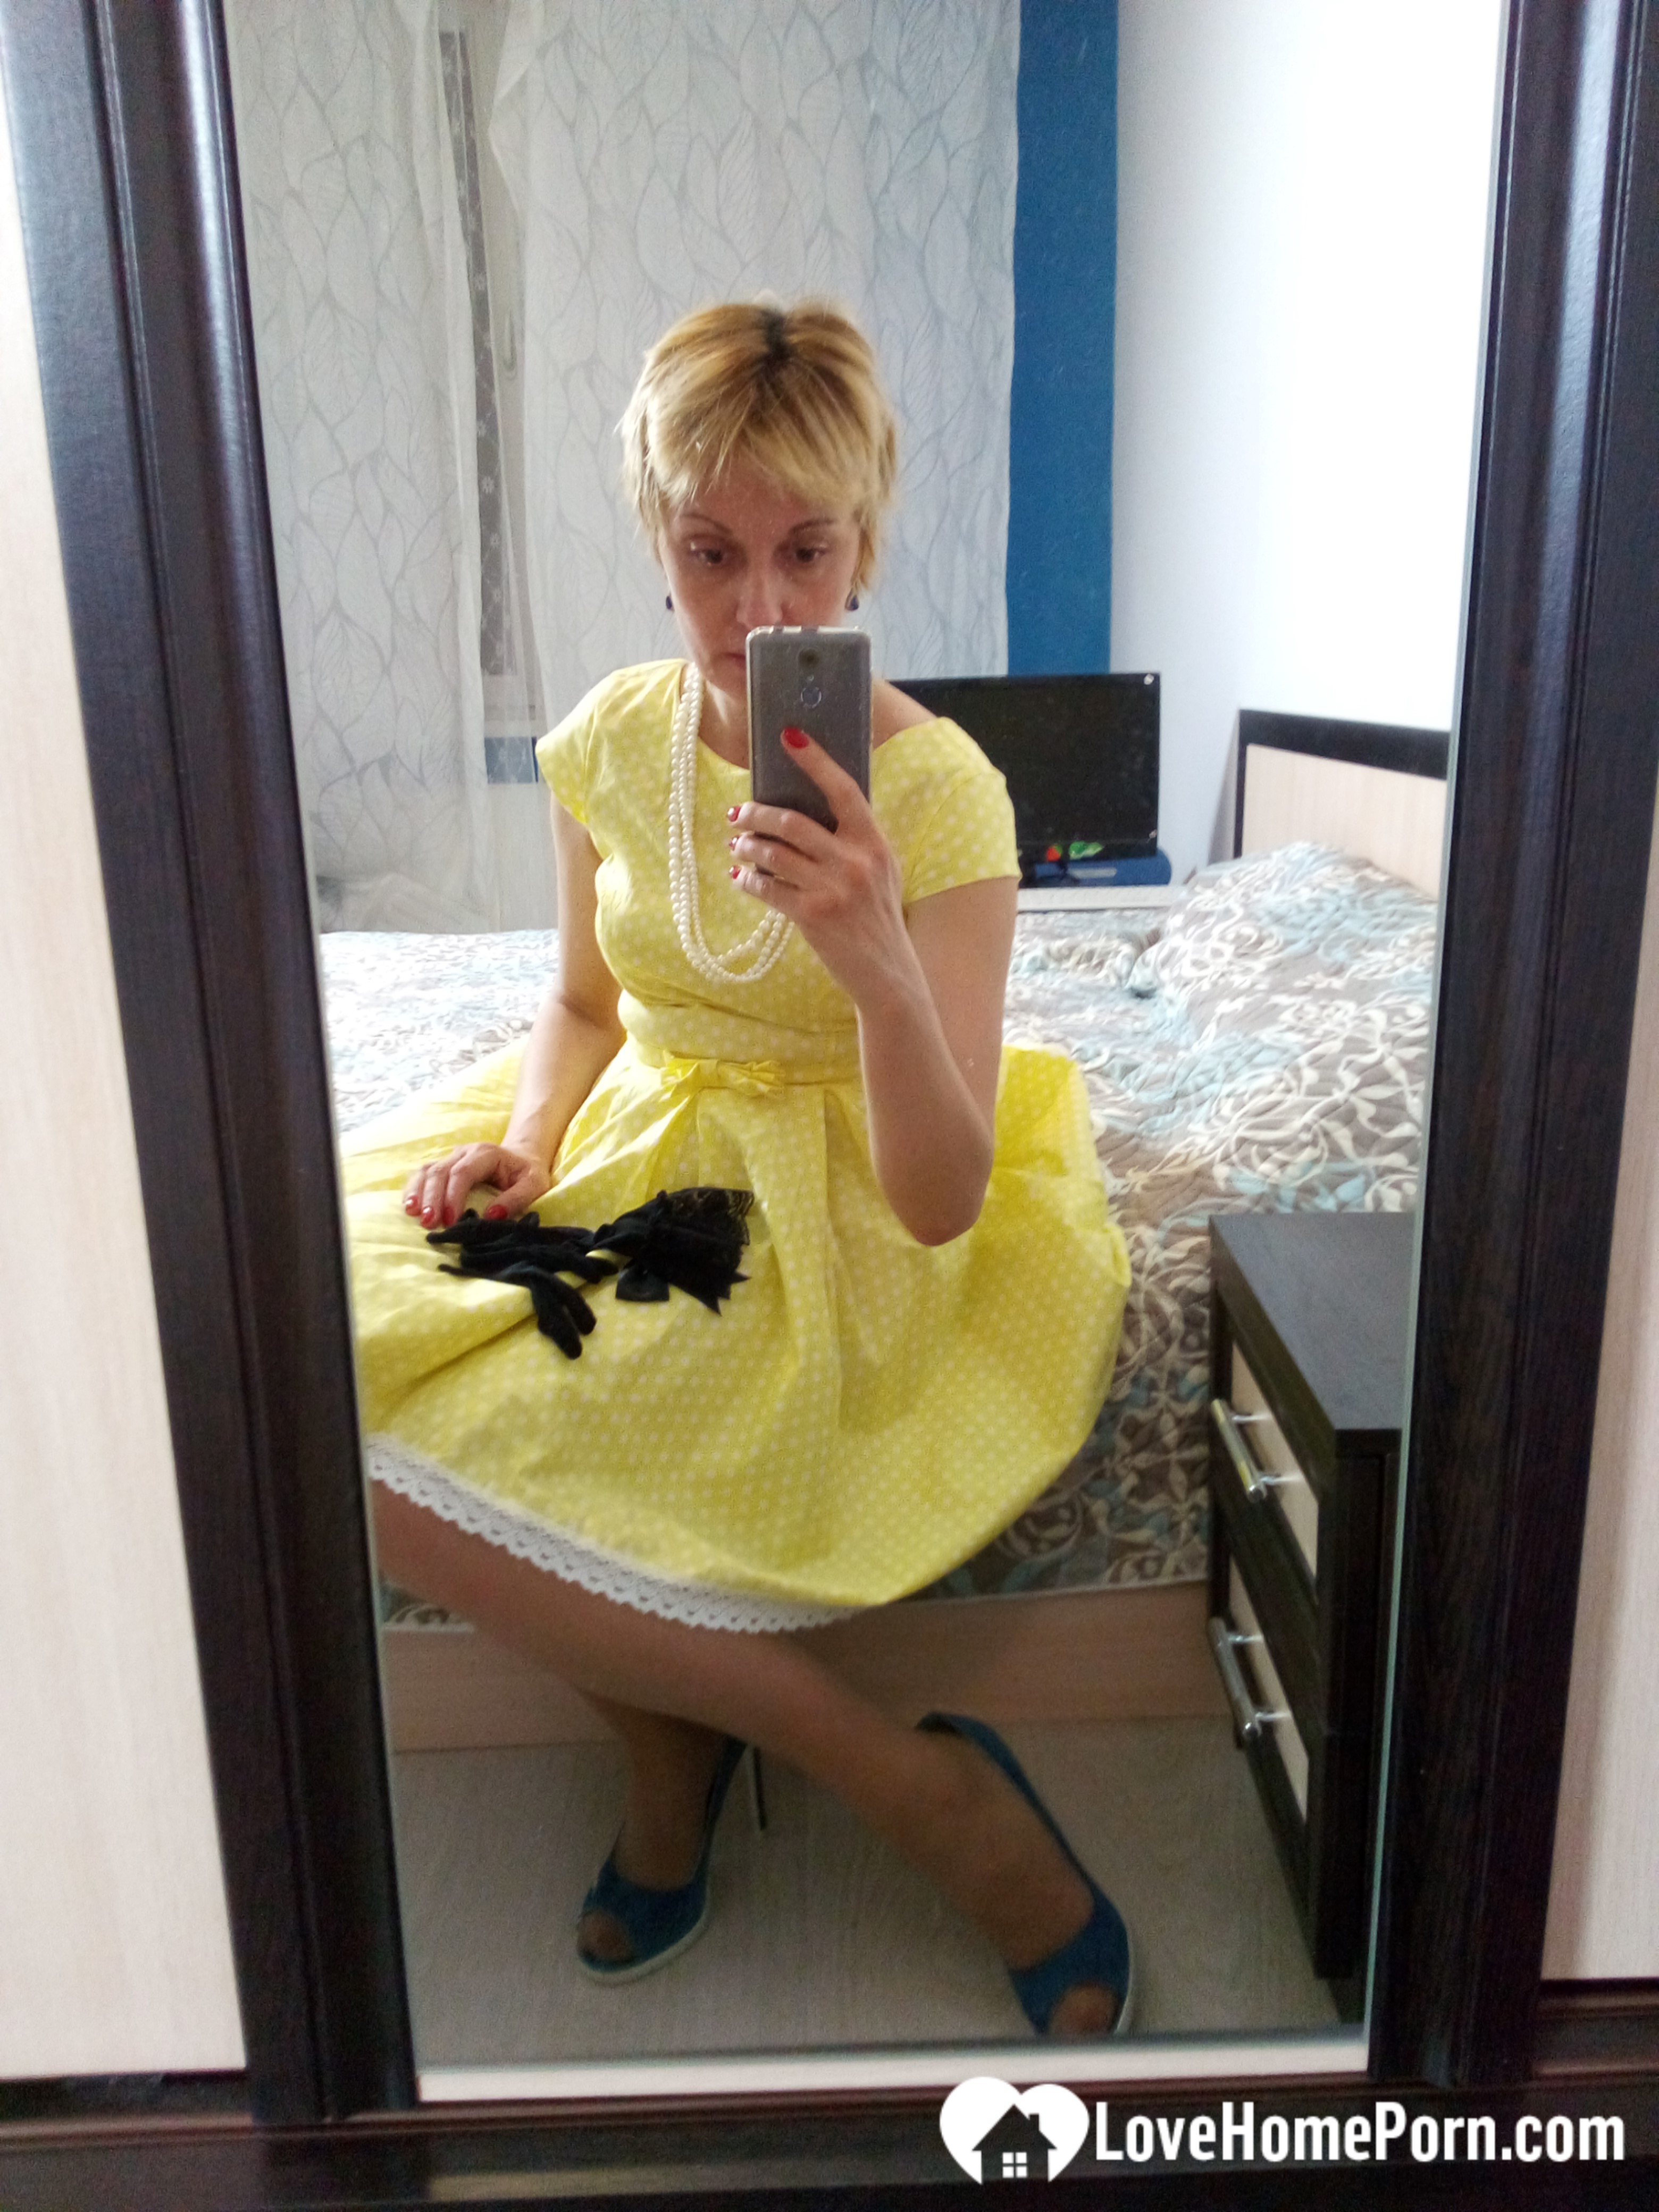 Stunning MILF puts on a yellow dress